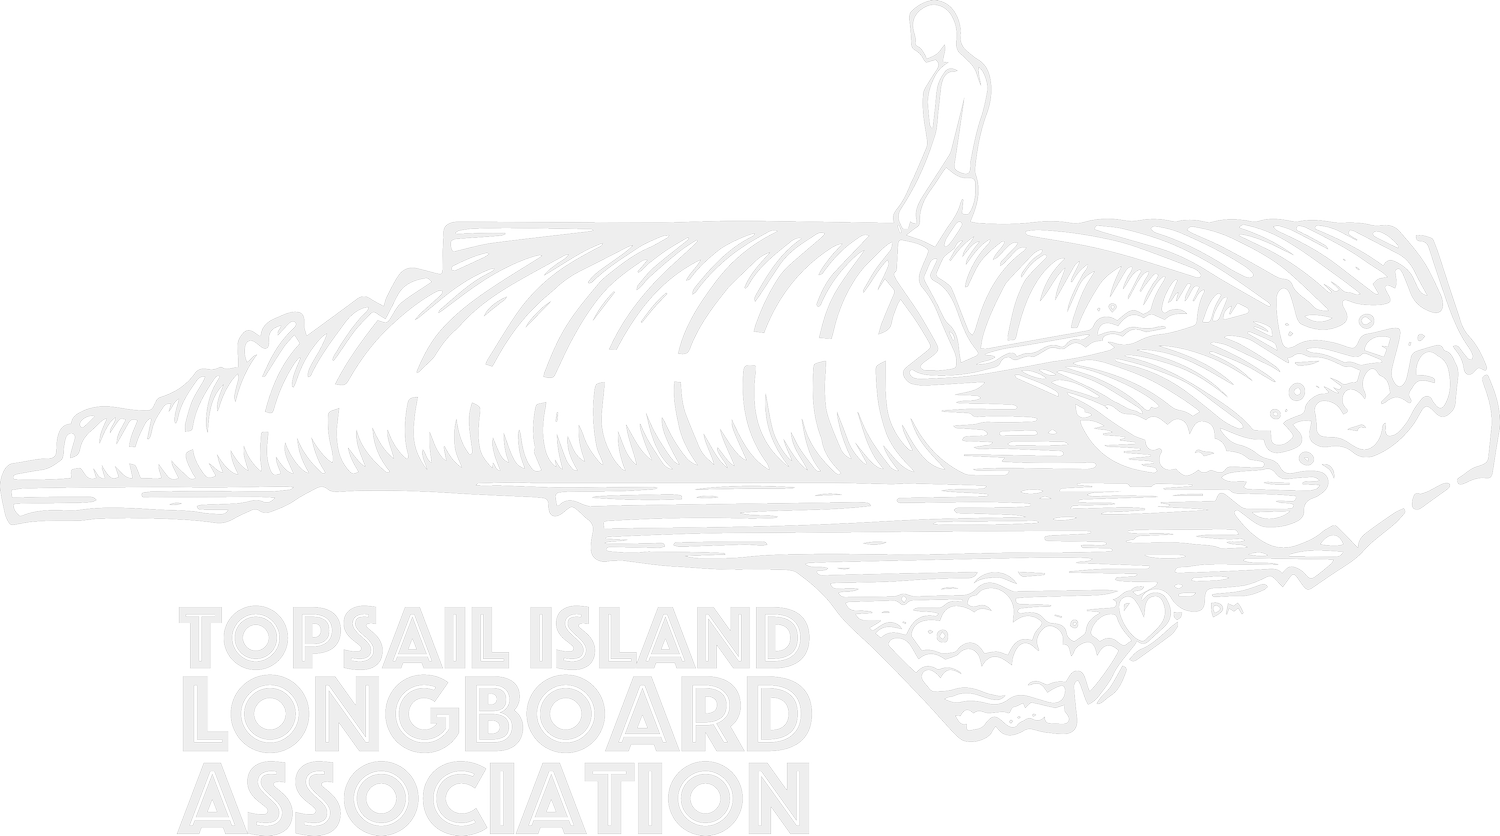 Topsail Island Longboard Association